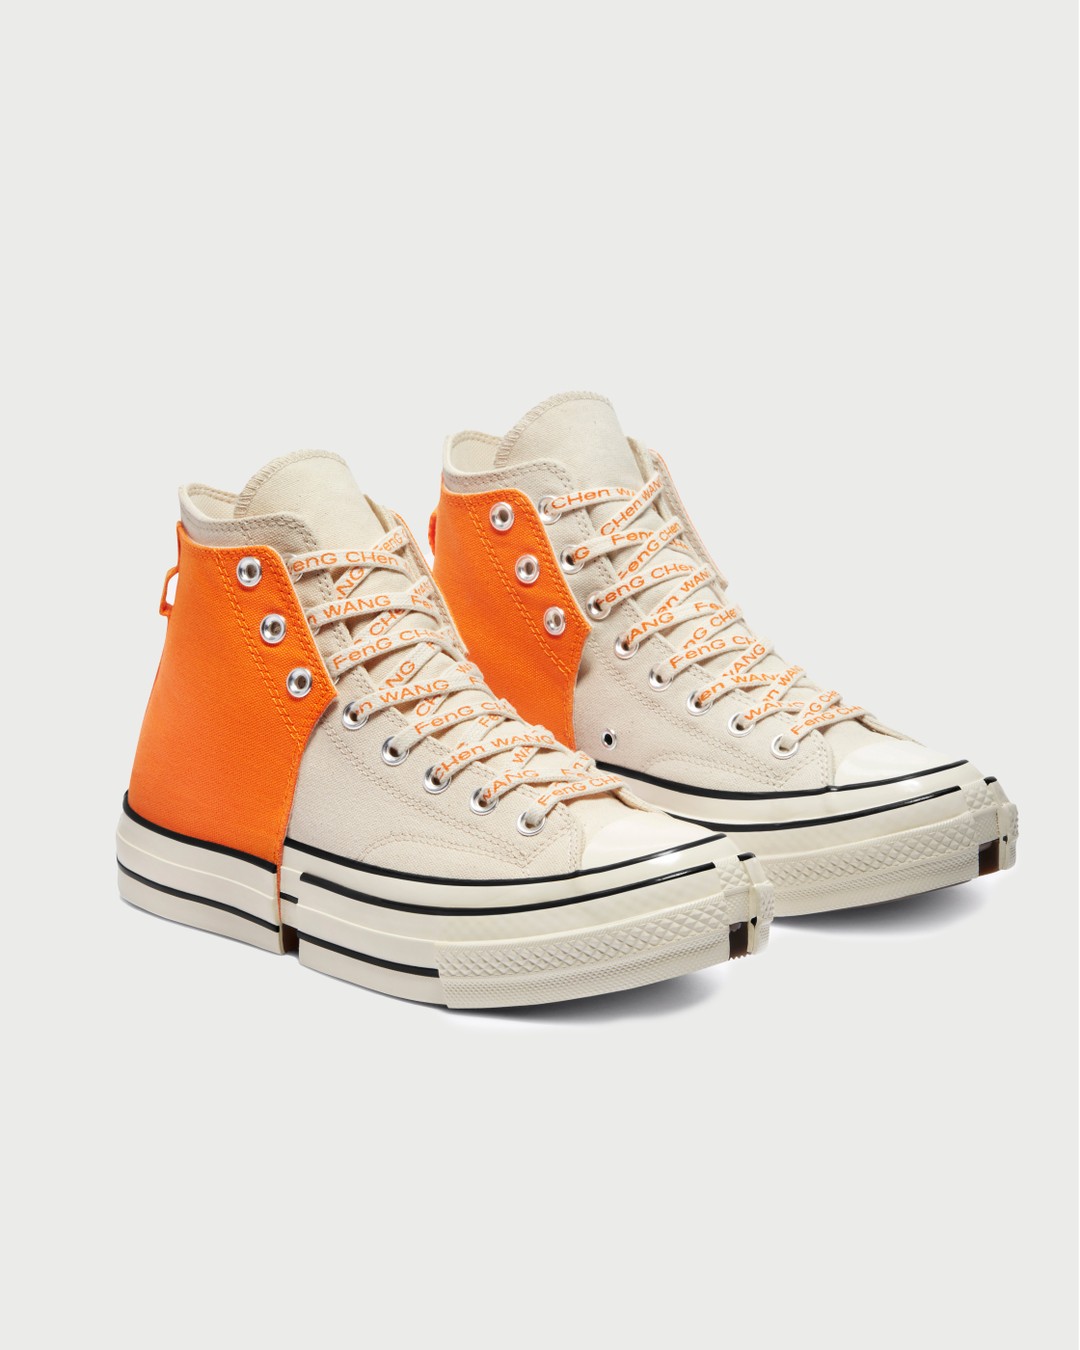 Converse x Feng Chen Wang – 2-in-1 Chuck 70 High Persimmon Orange - High Top Sneakers - Orange - Image 2